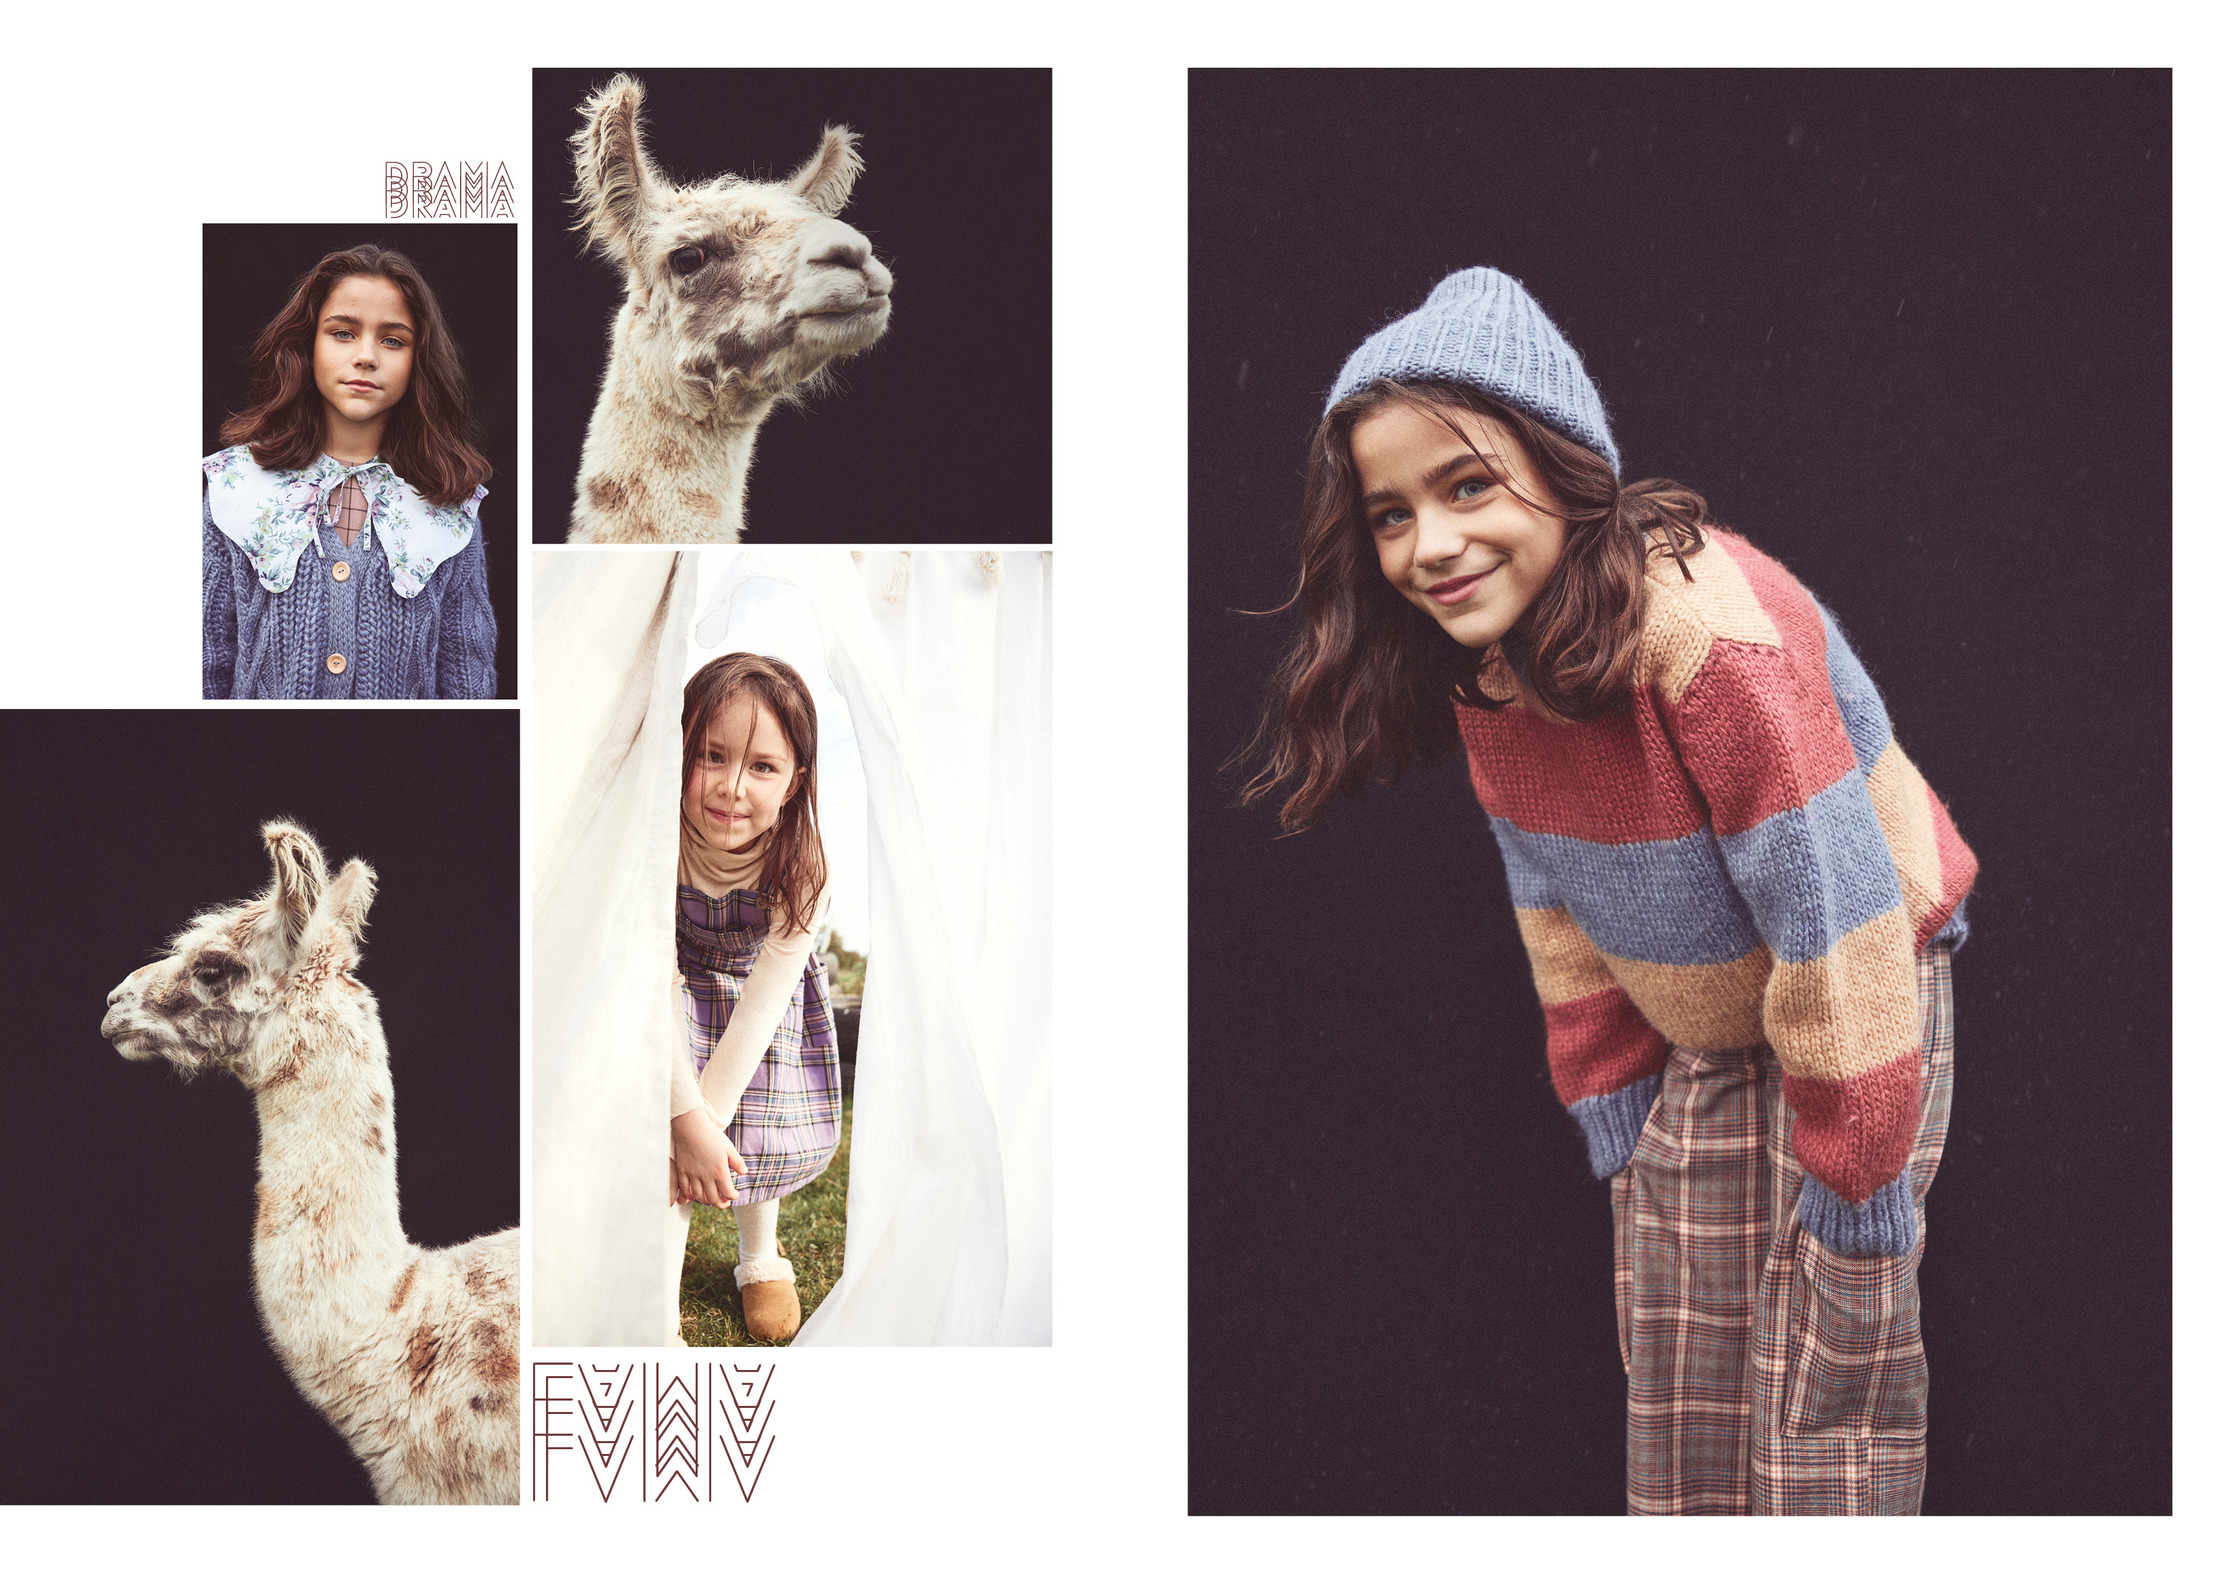 a girl is posing with a llama and a llama